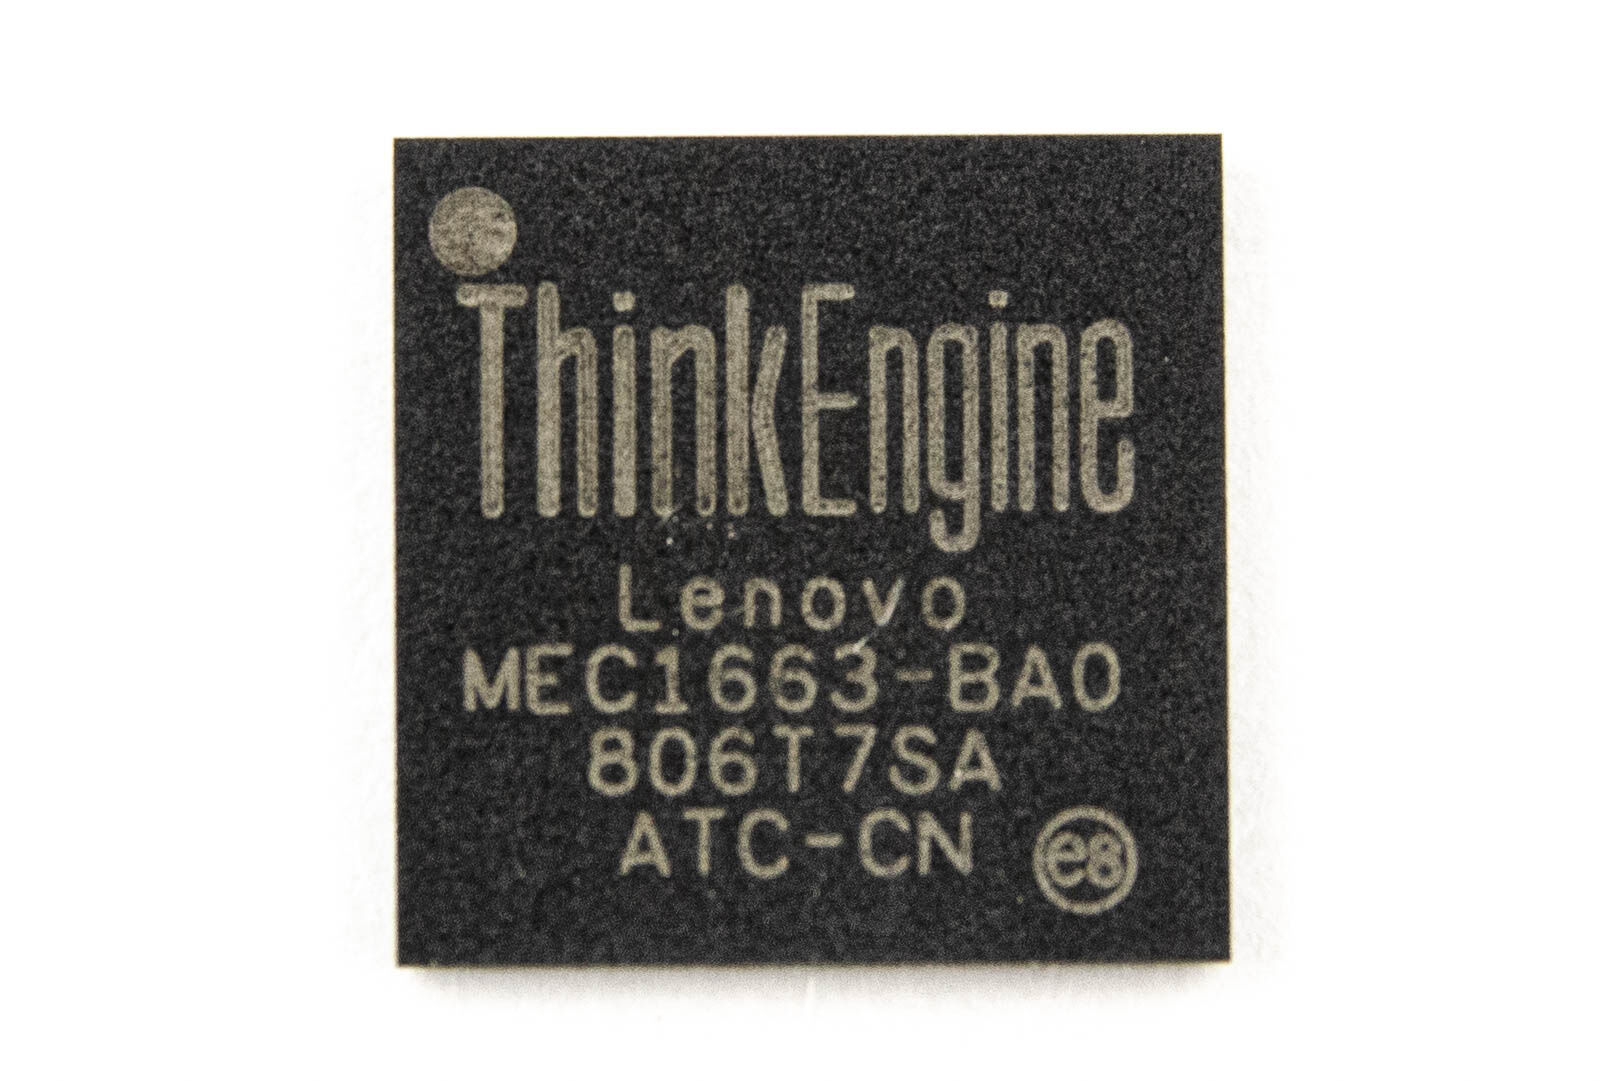 Мультиконтроллер MEC1663 NEW SMSC